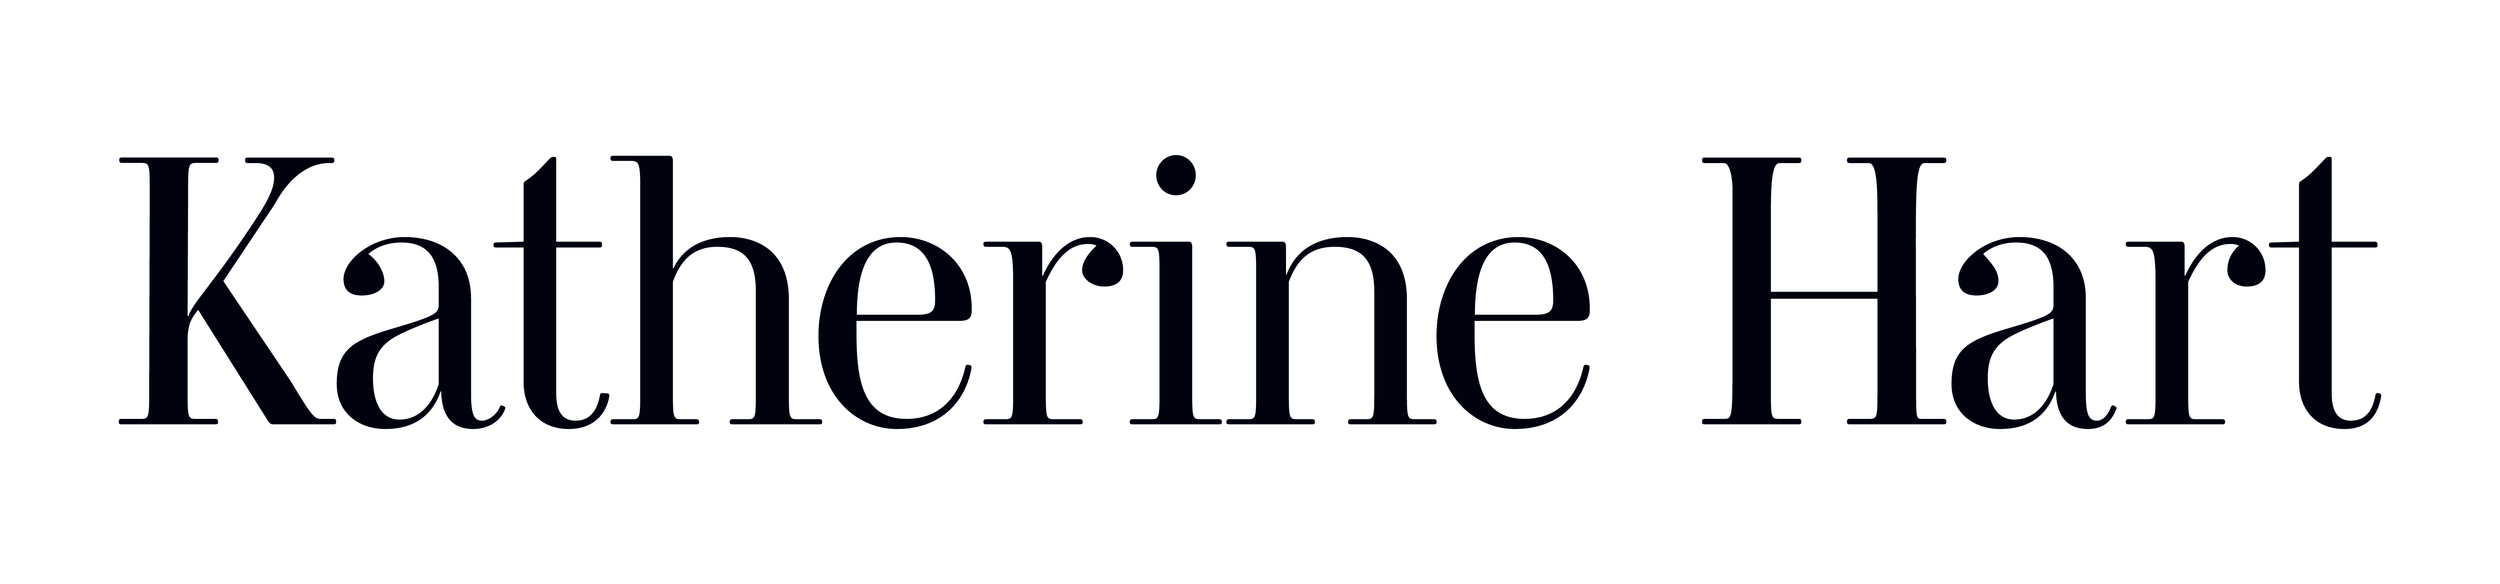 3 Katherine Hart logo.png